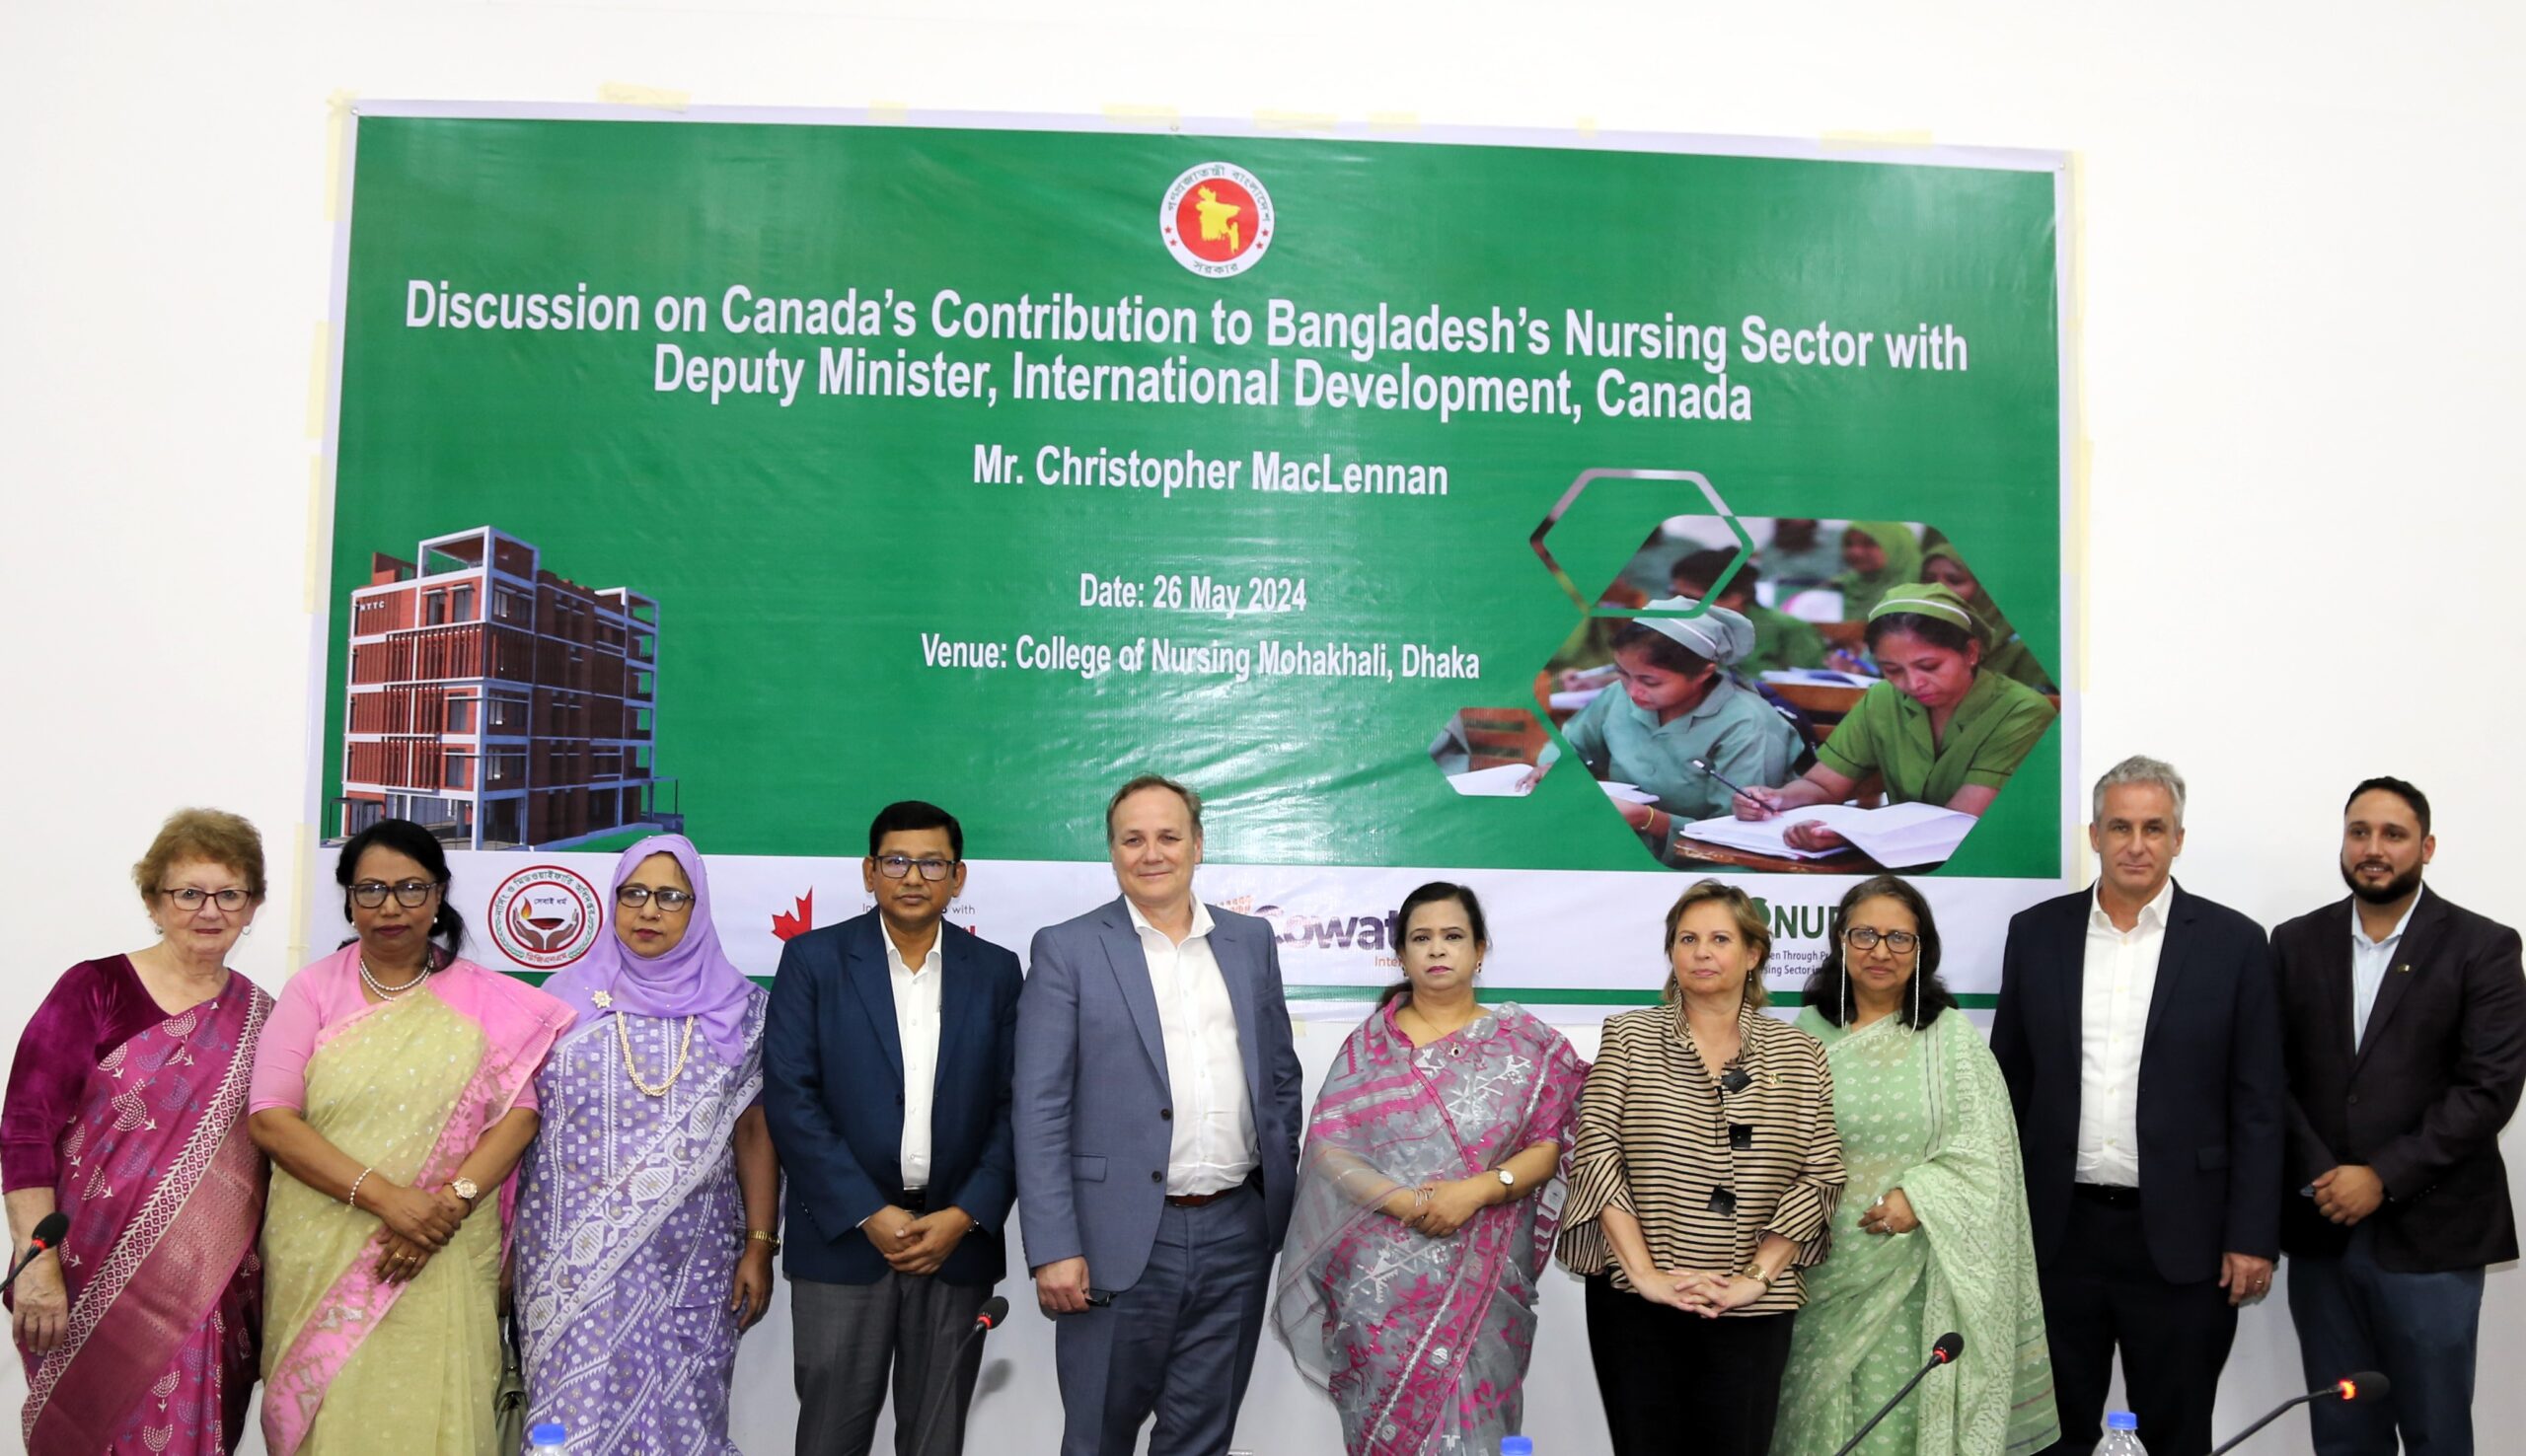 Deputy Minister’s visit highlights Canada’s support for Bangladeshi nursing sector